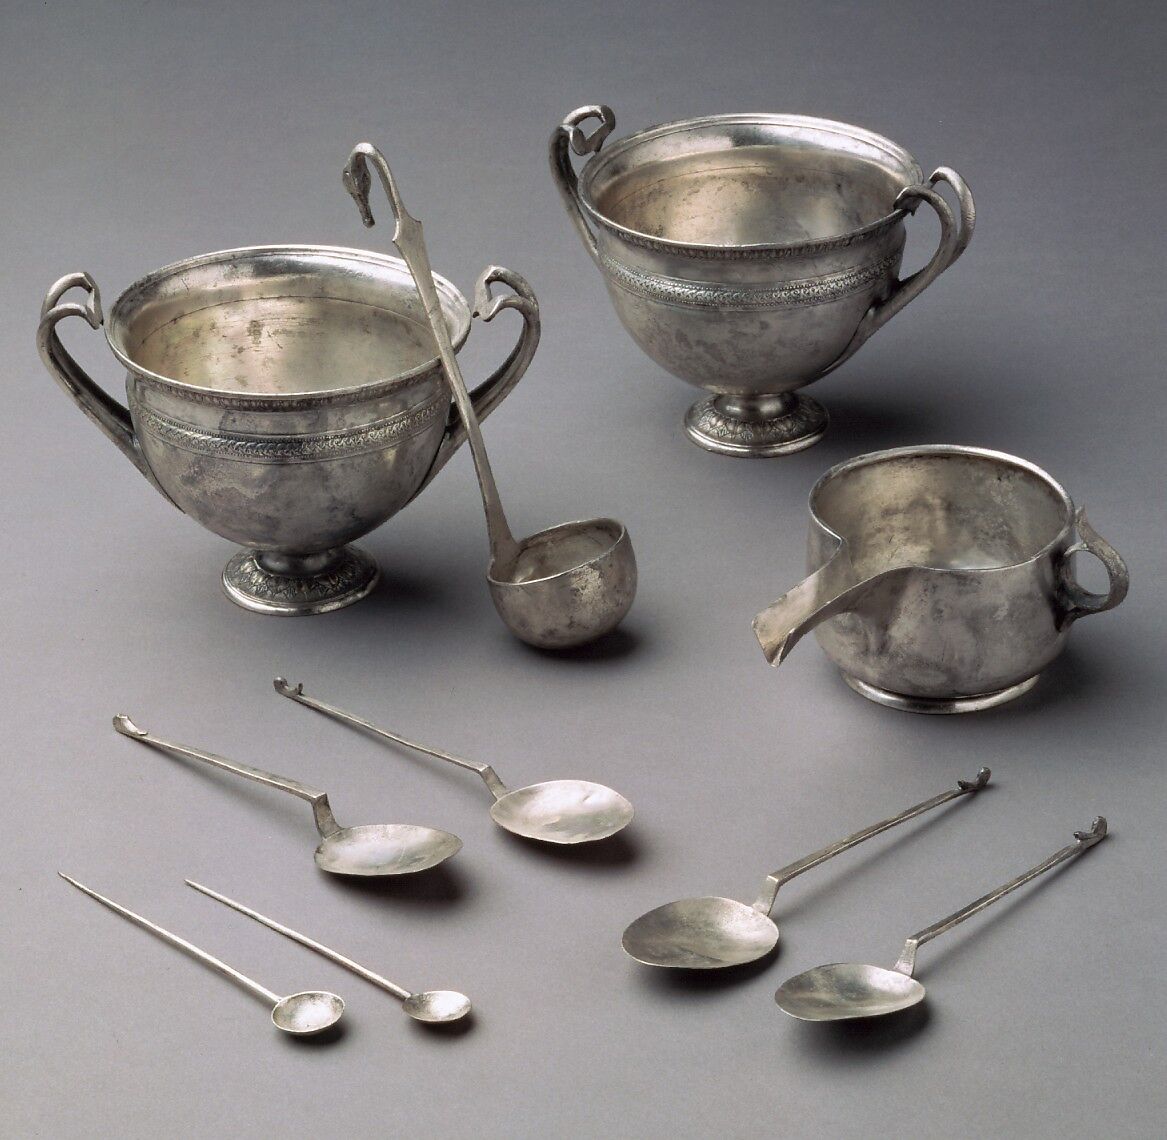 Tableware from the Tivoli Hoard, Silver, Roman 